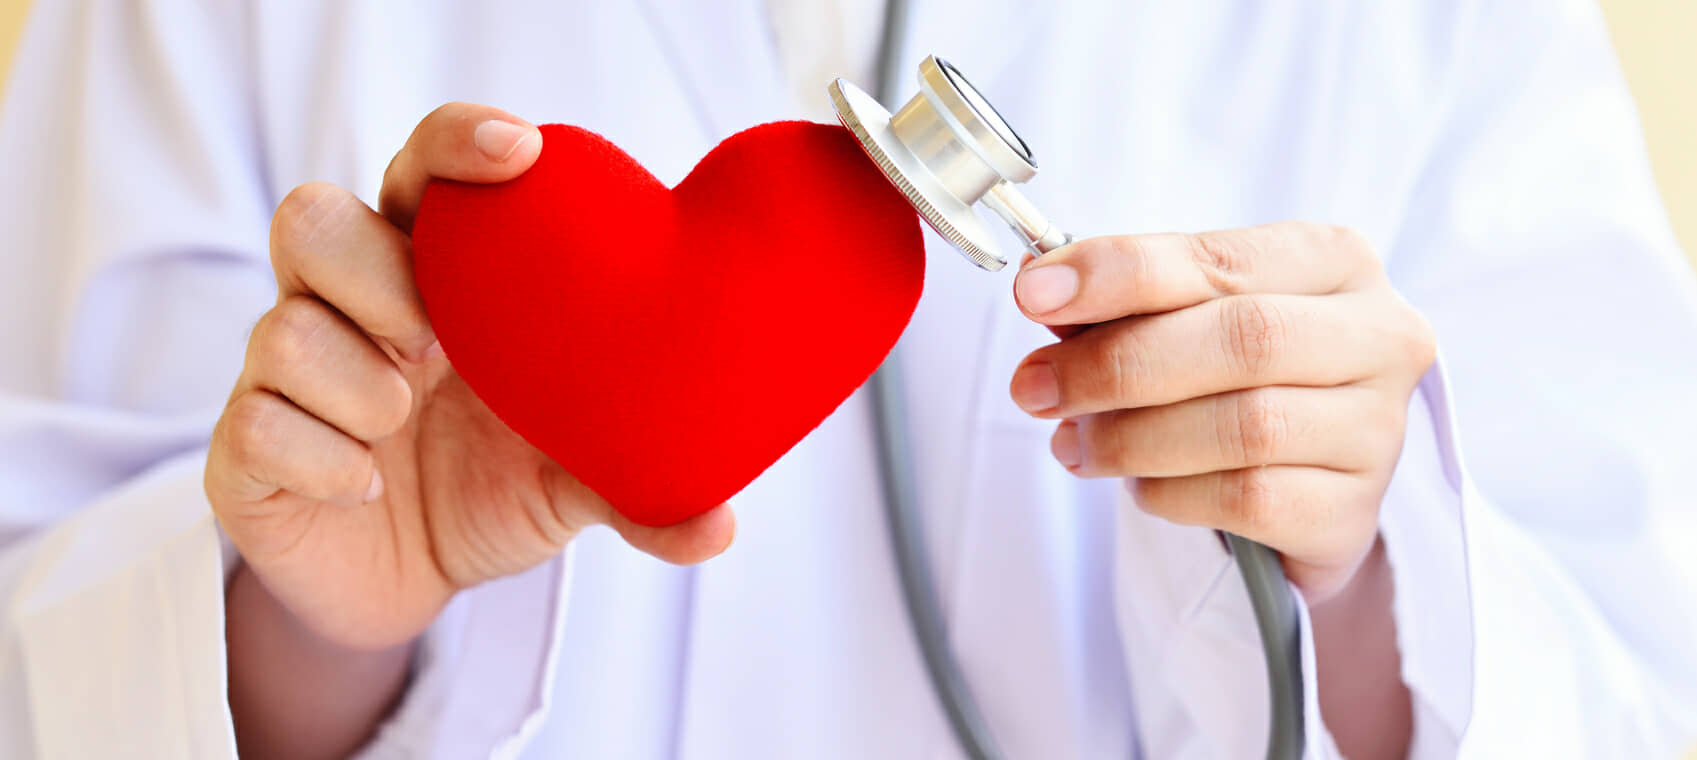 What Is Heart Disease